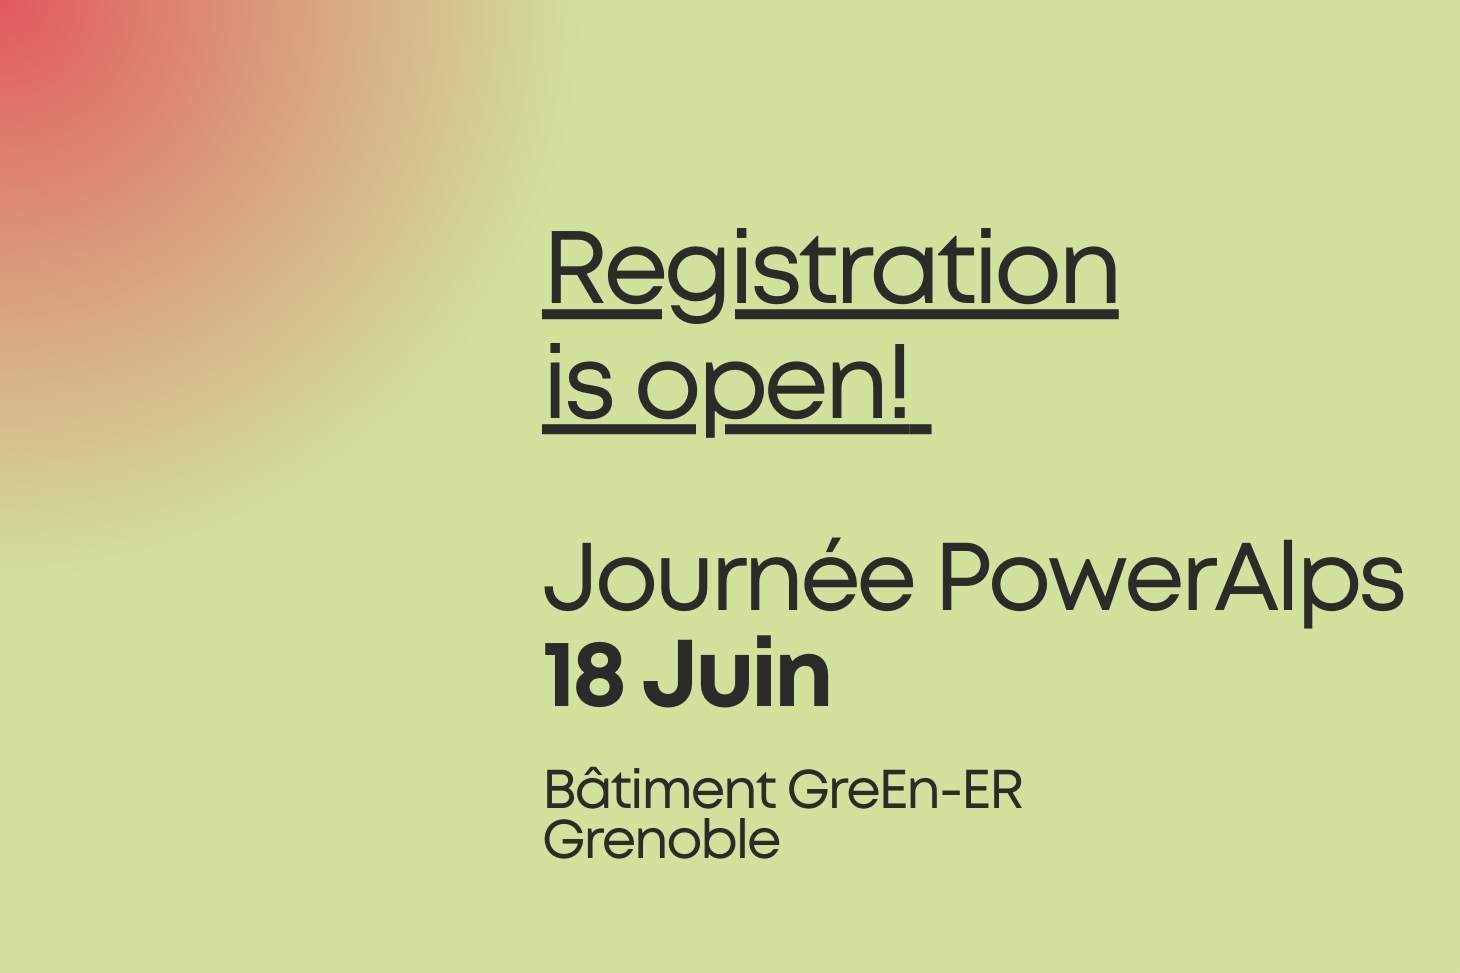 Registrations are open : Journée PowerAlps 18 Juin 